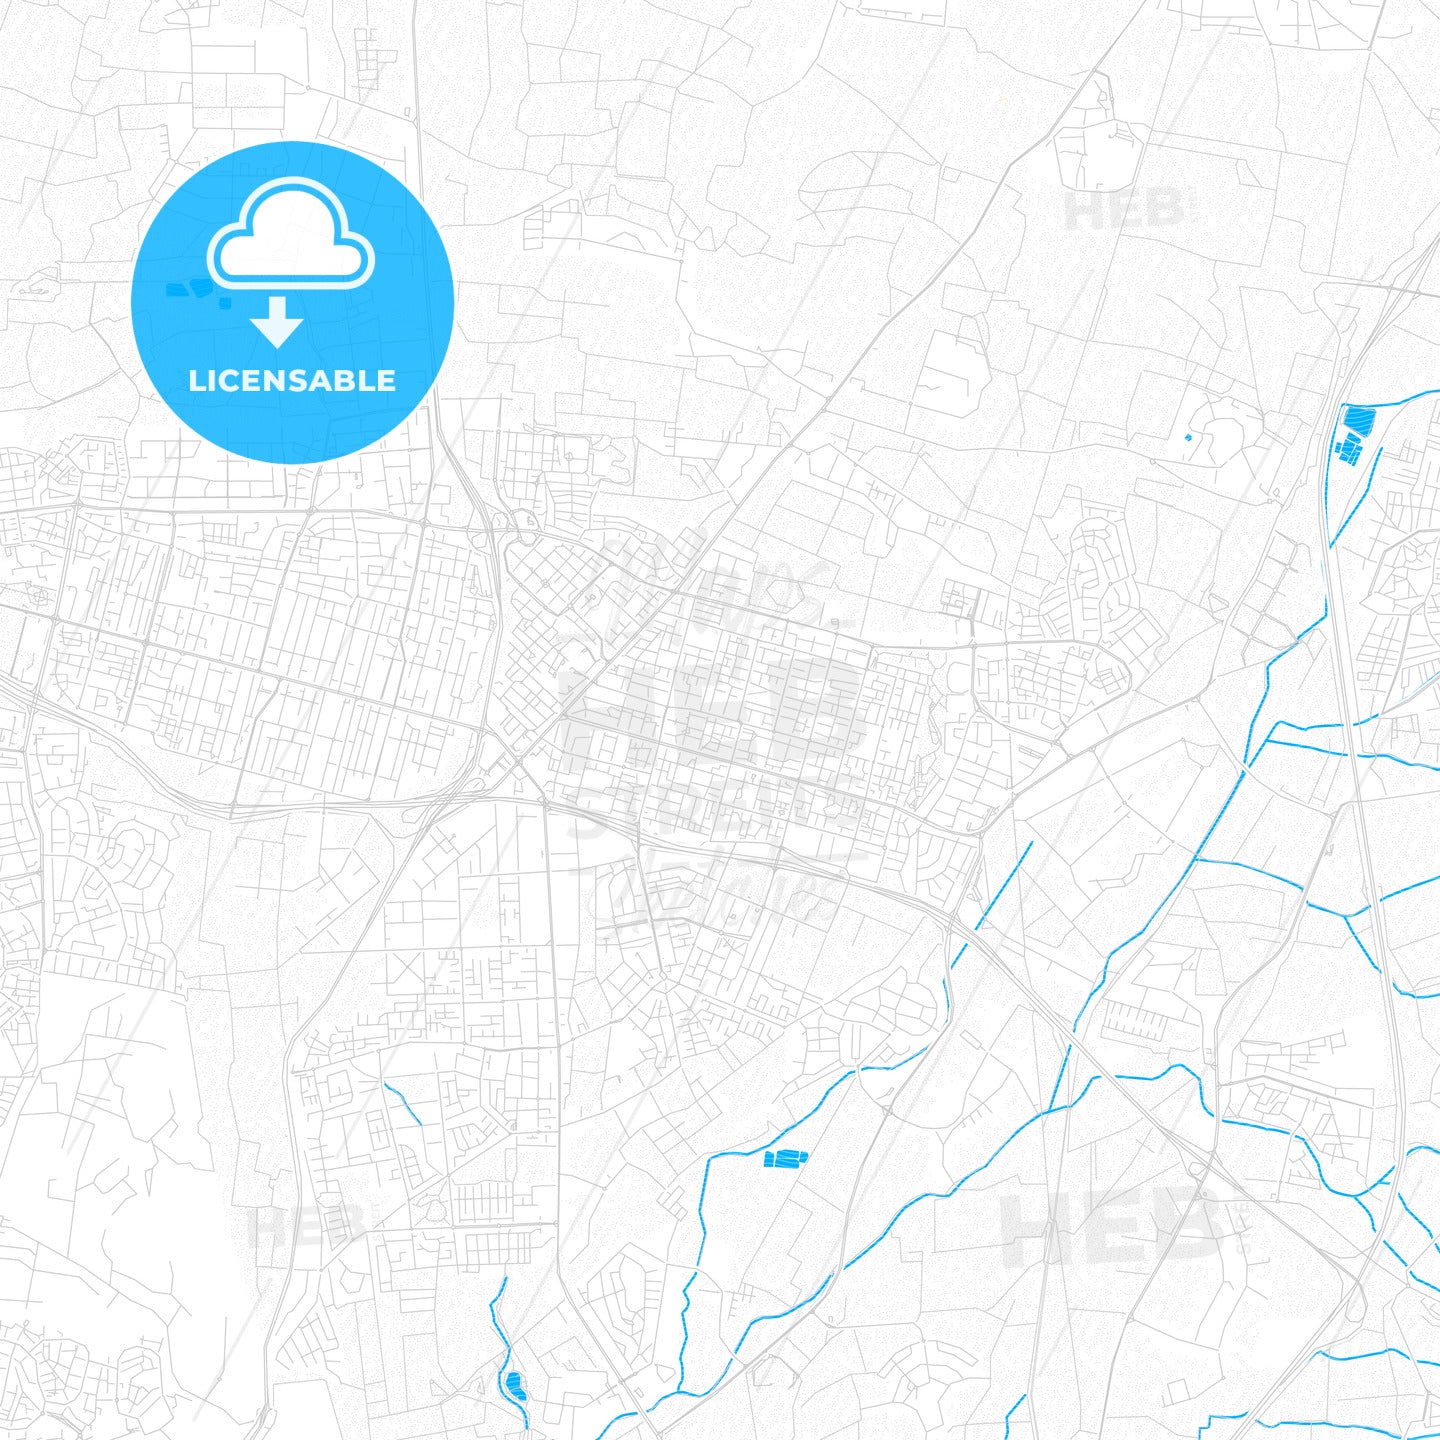 Kfar Saba, Israel PDF vector map with water in focus